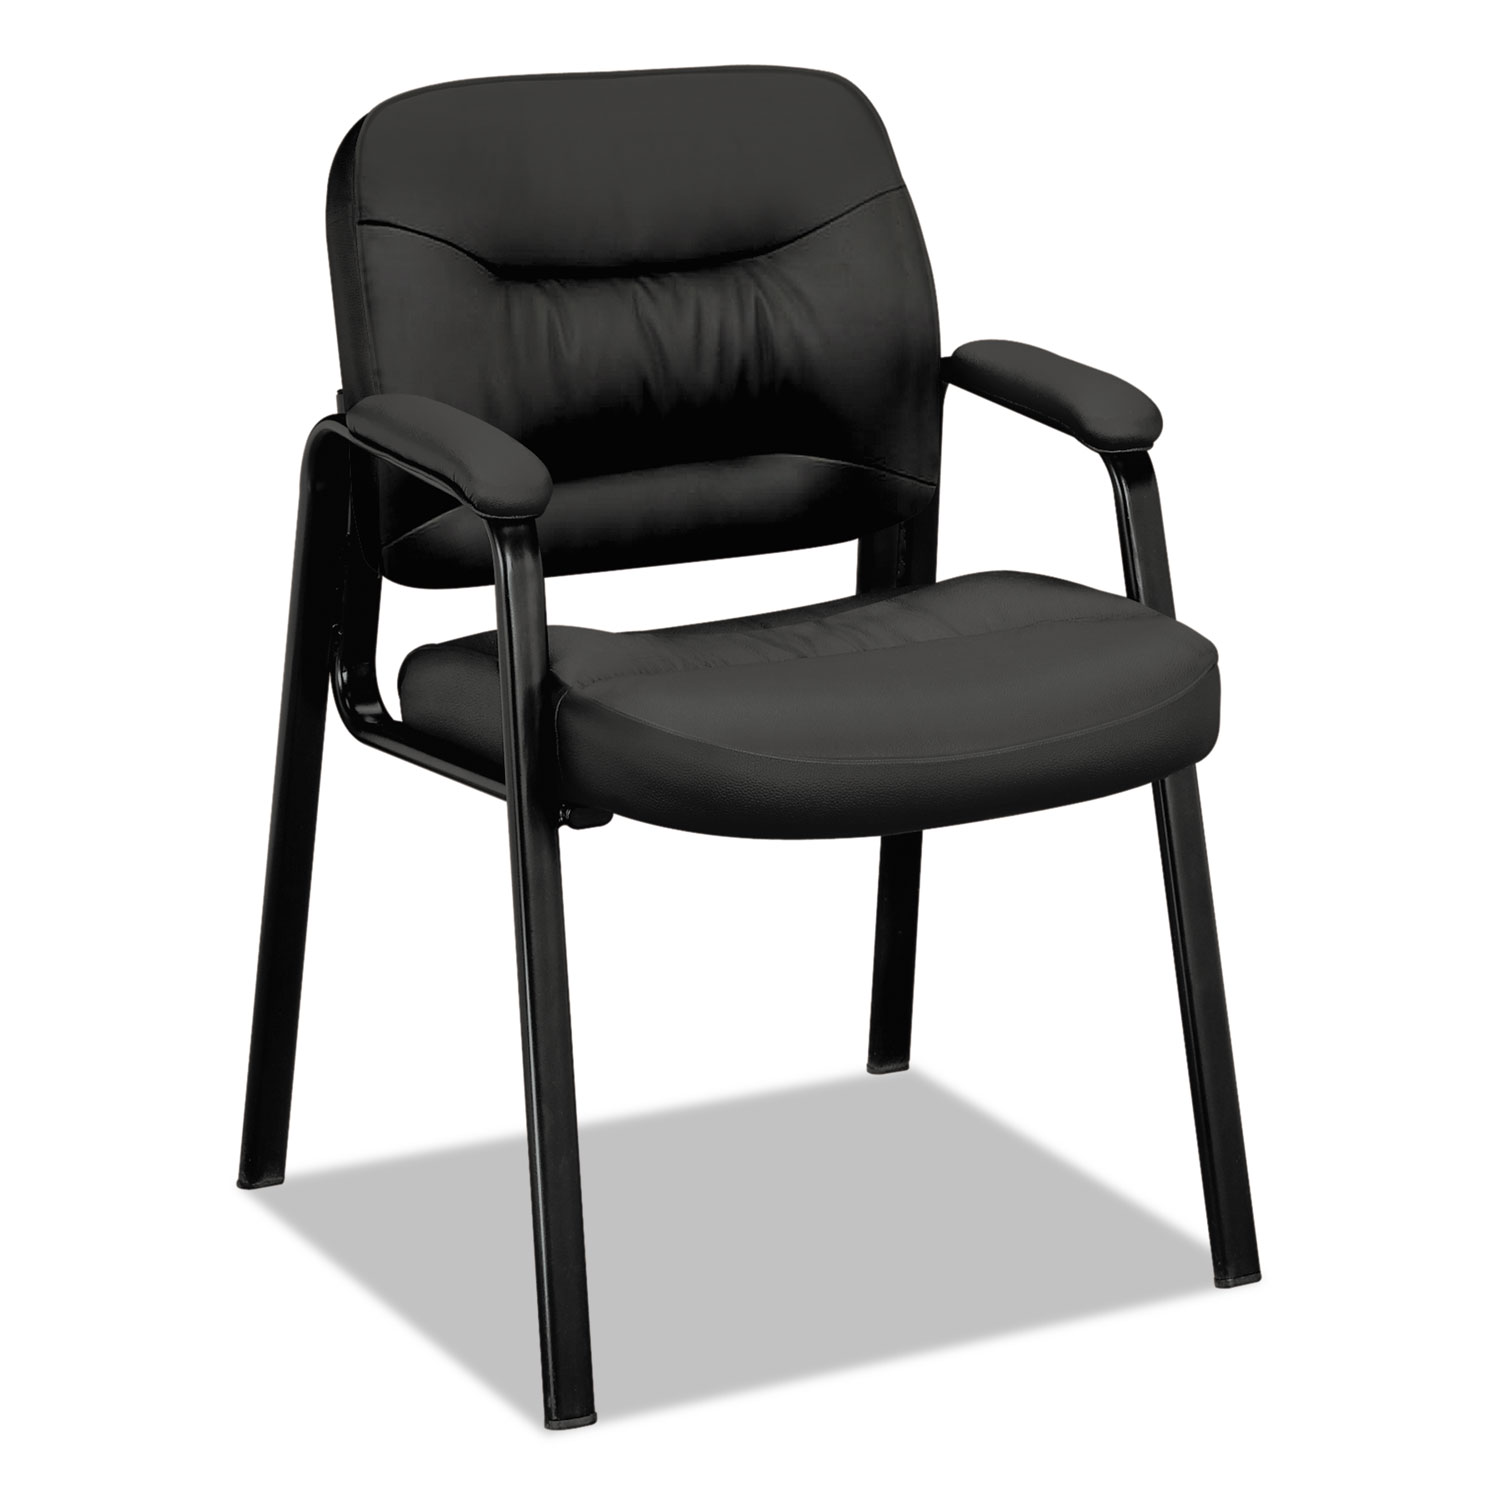  HON HVL643.SB11 HVL643 Guest Chair, Supports up to 250 lbs., Black Seat/Black Back, Black Base (BSXVL643SB11) 